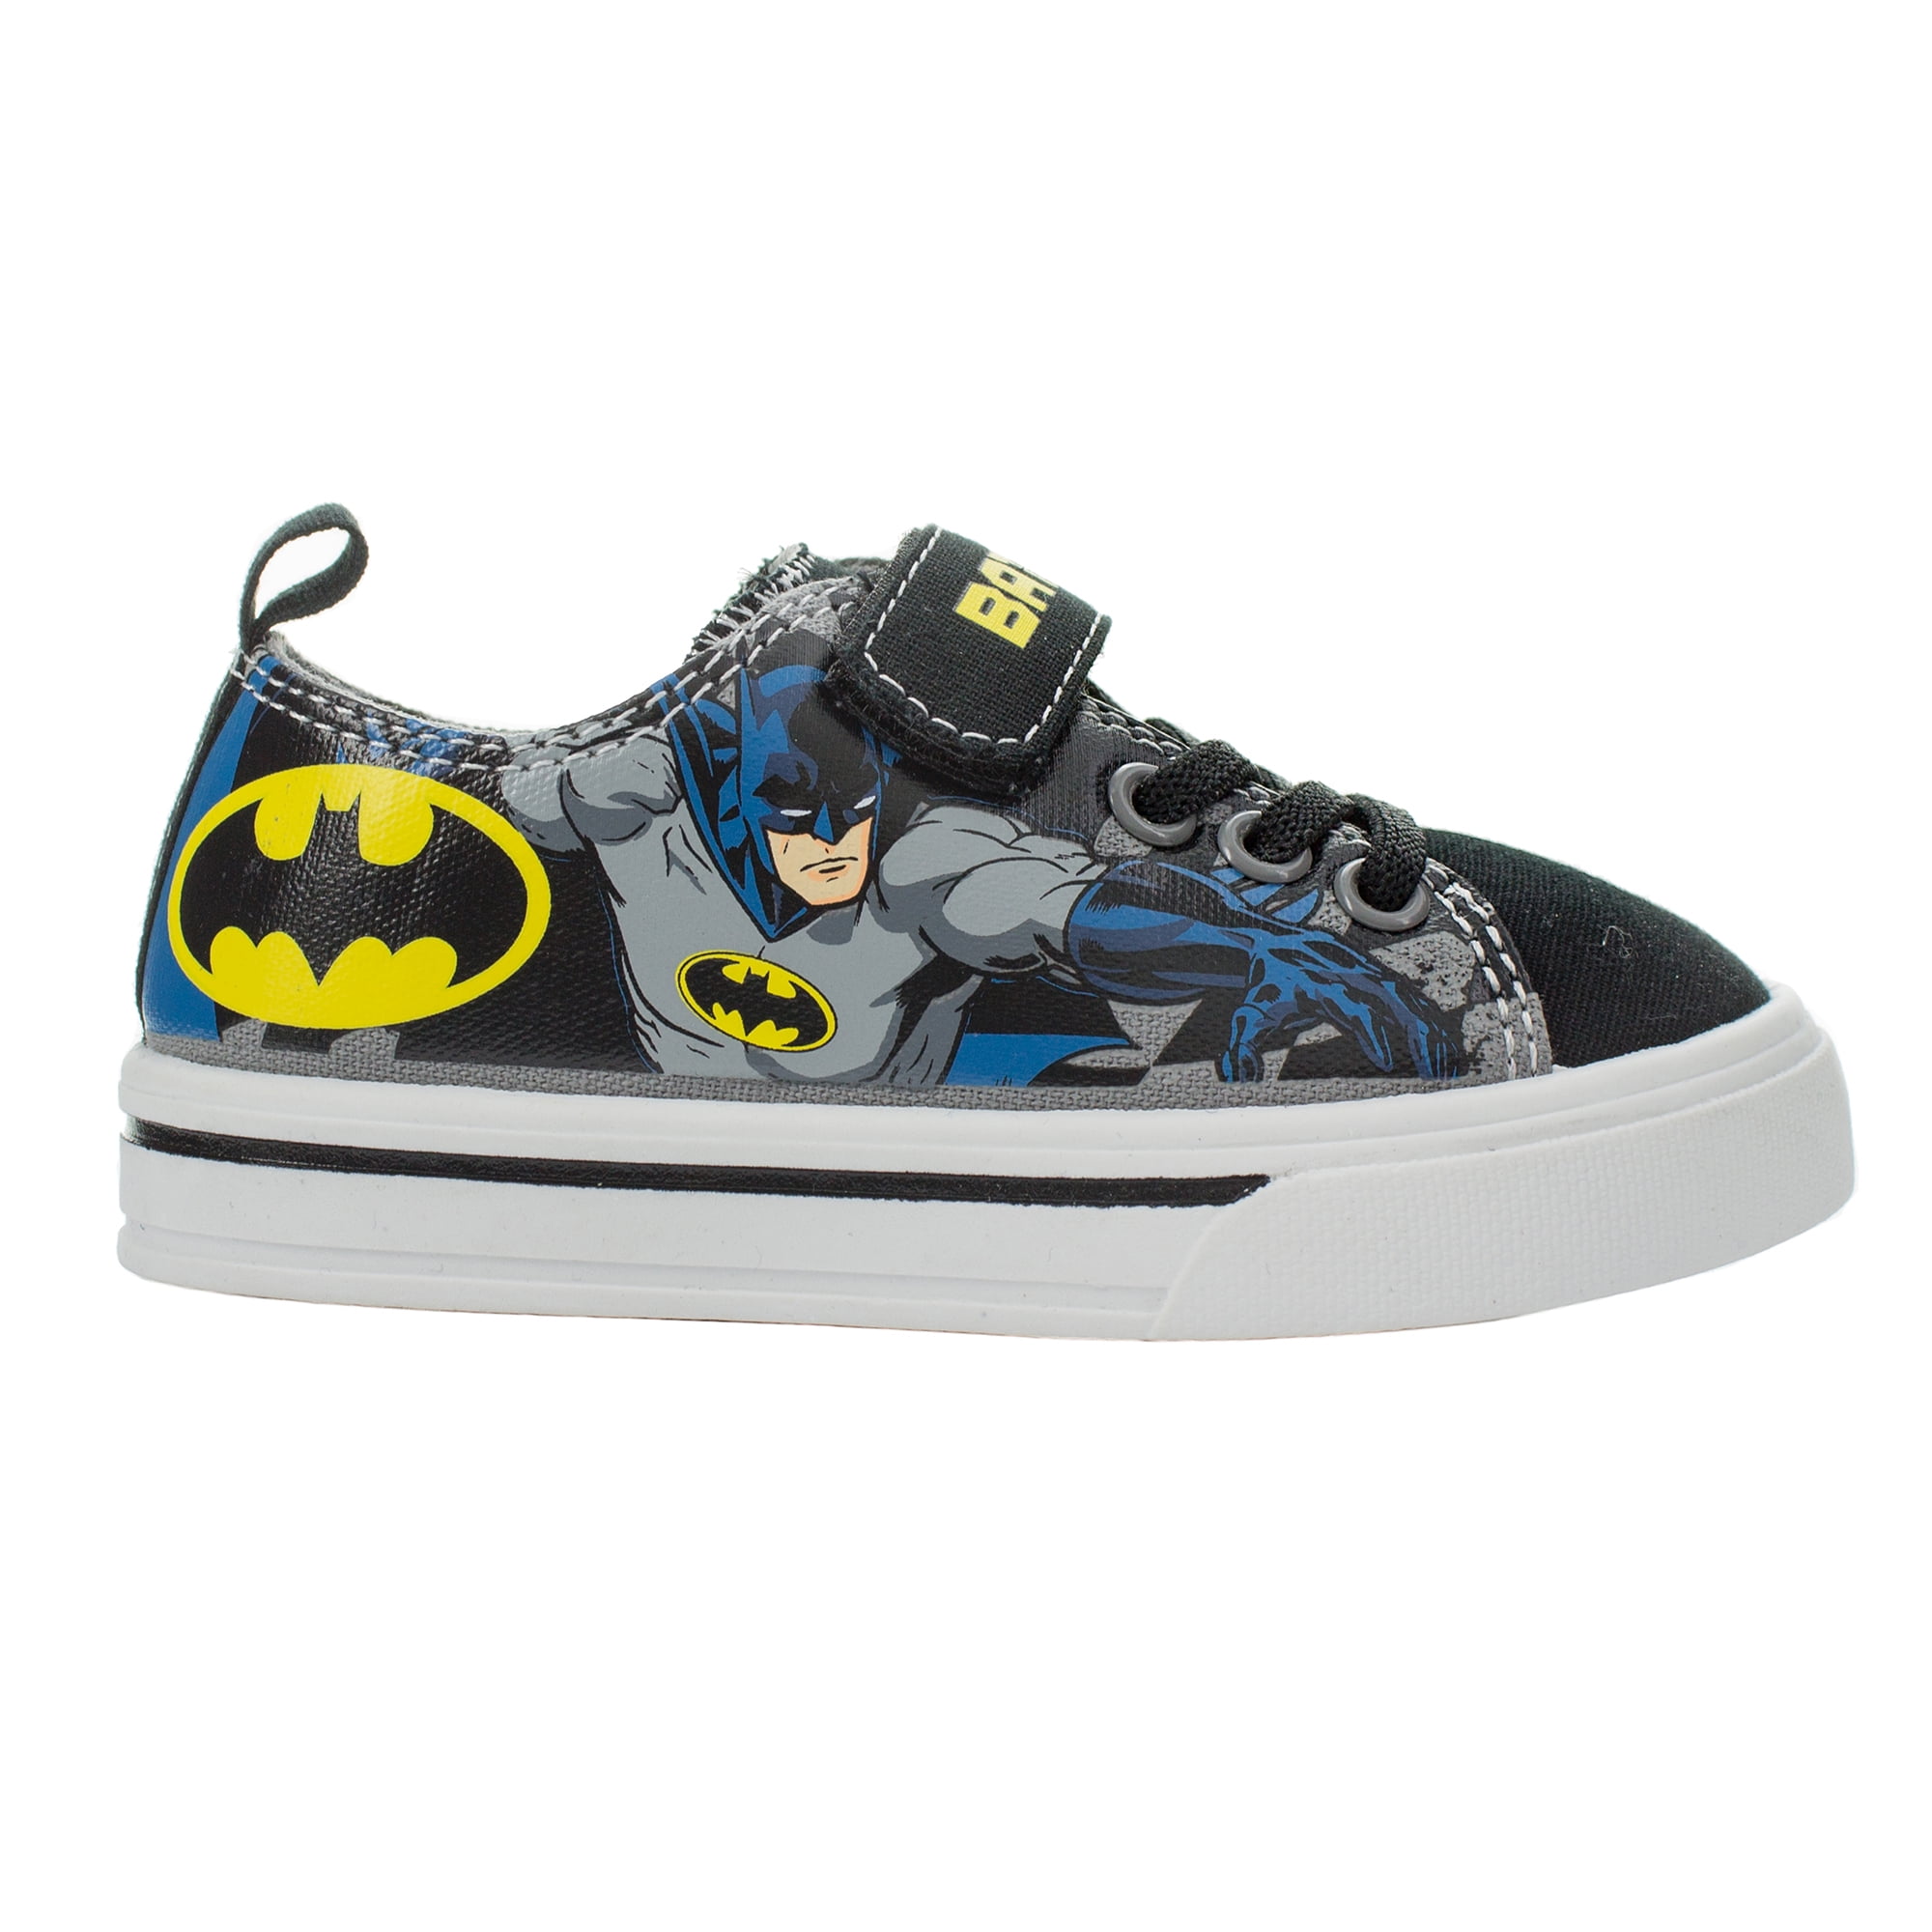 batman shoes walmart